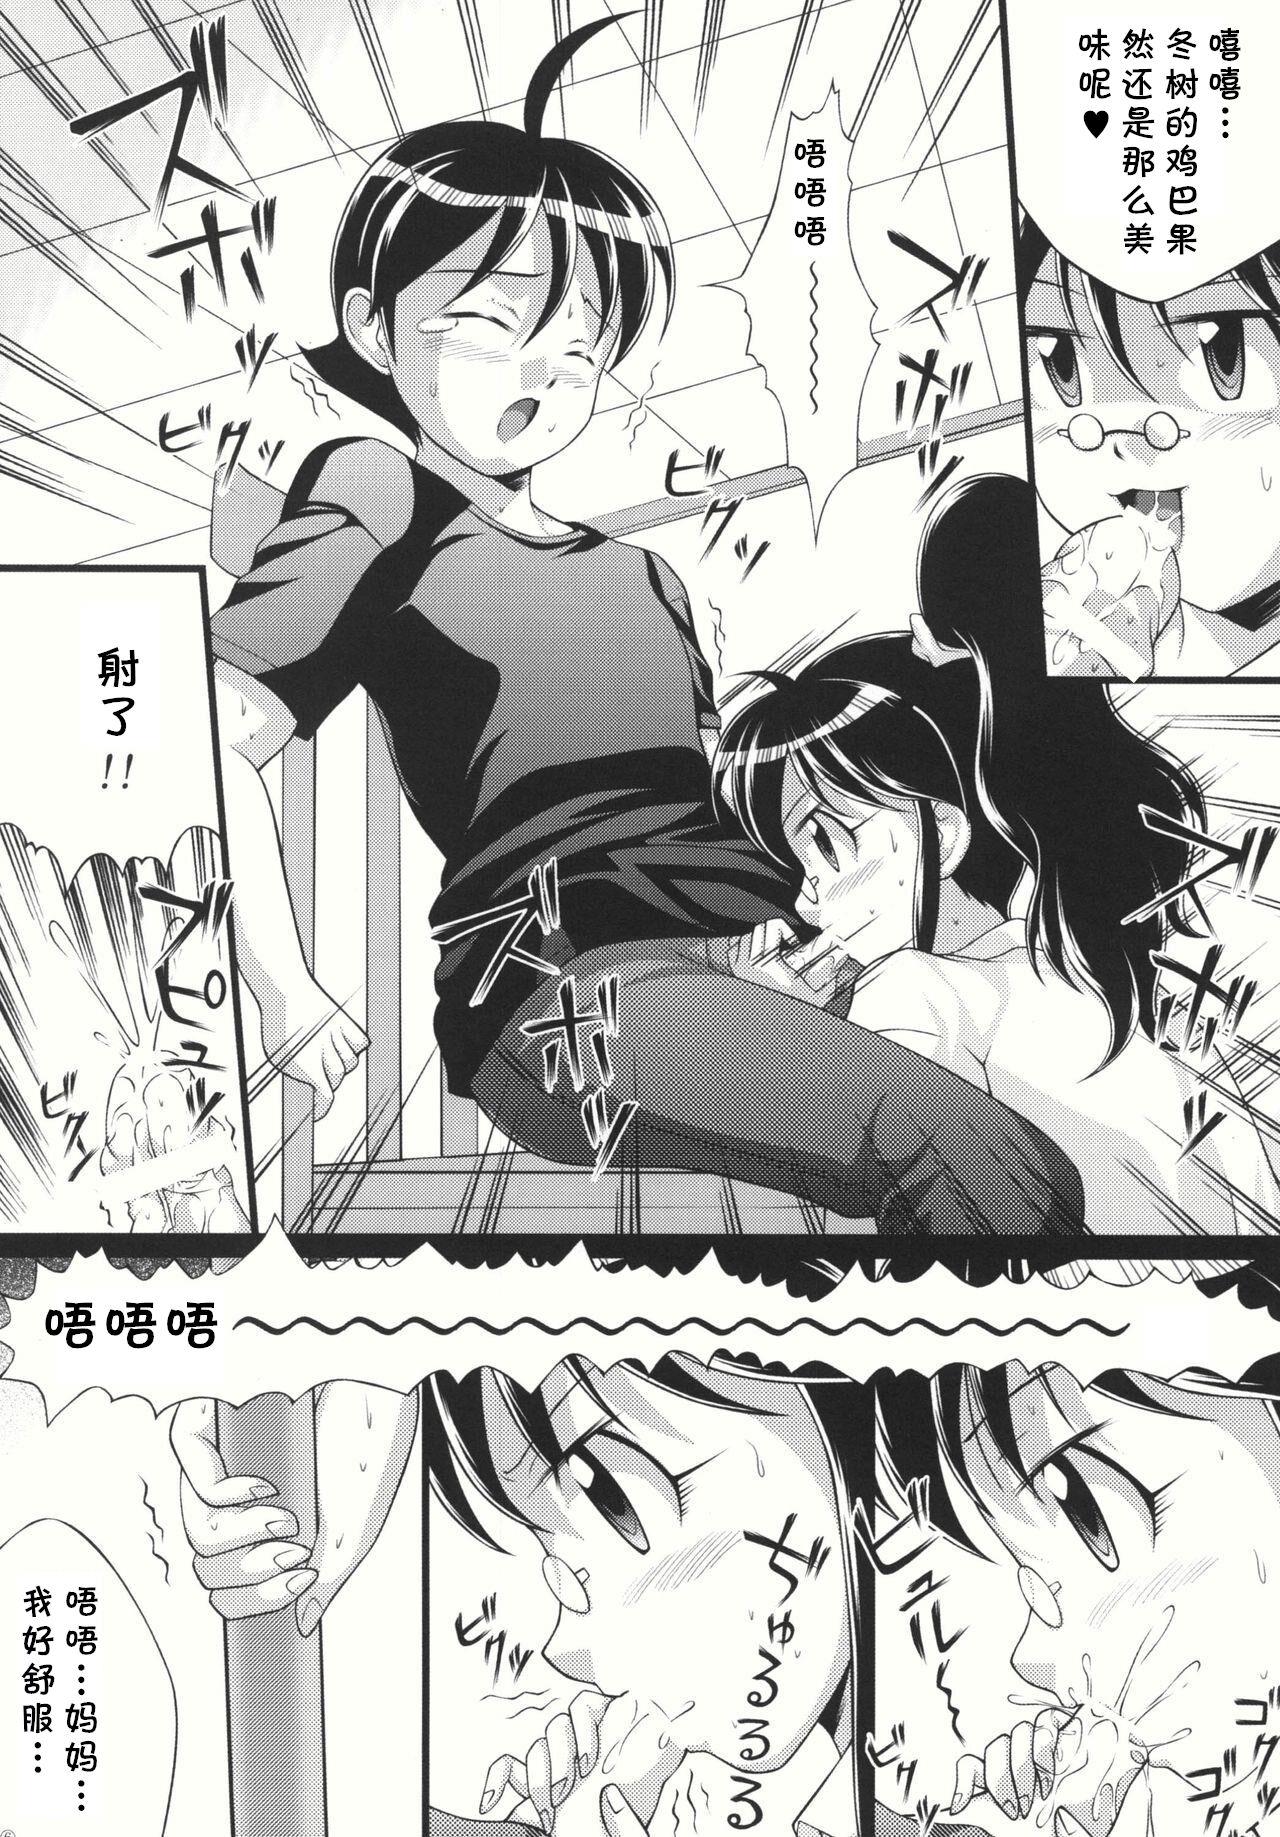 Little Chikyuujin Maruhi Seitai Chousa Houkokusho 4 - Keroro gunsou | sgt. frog Les - Page 8